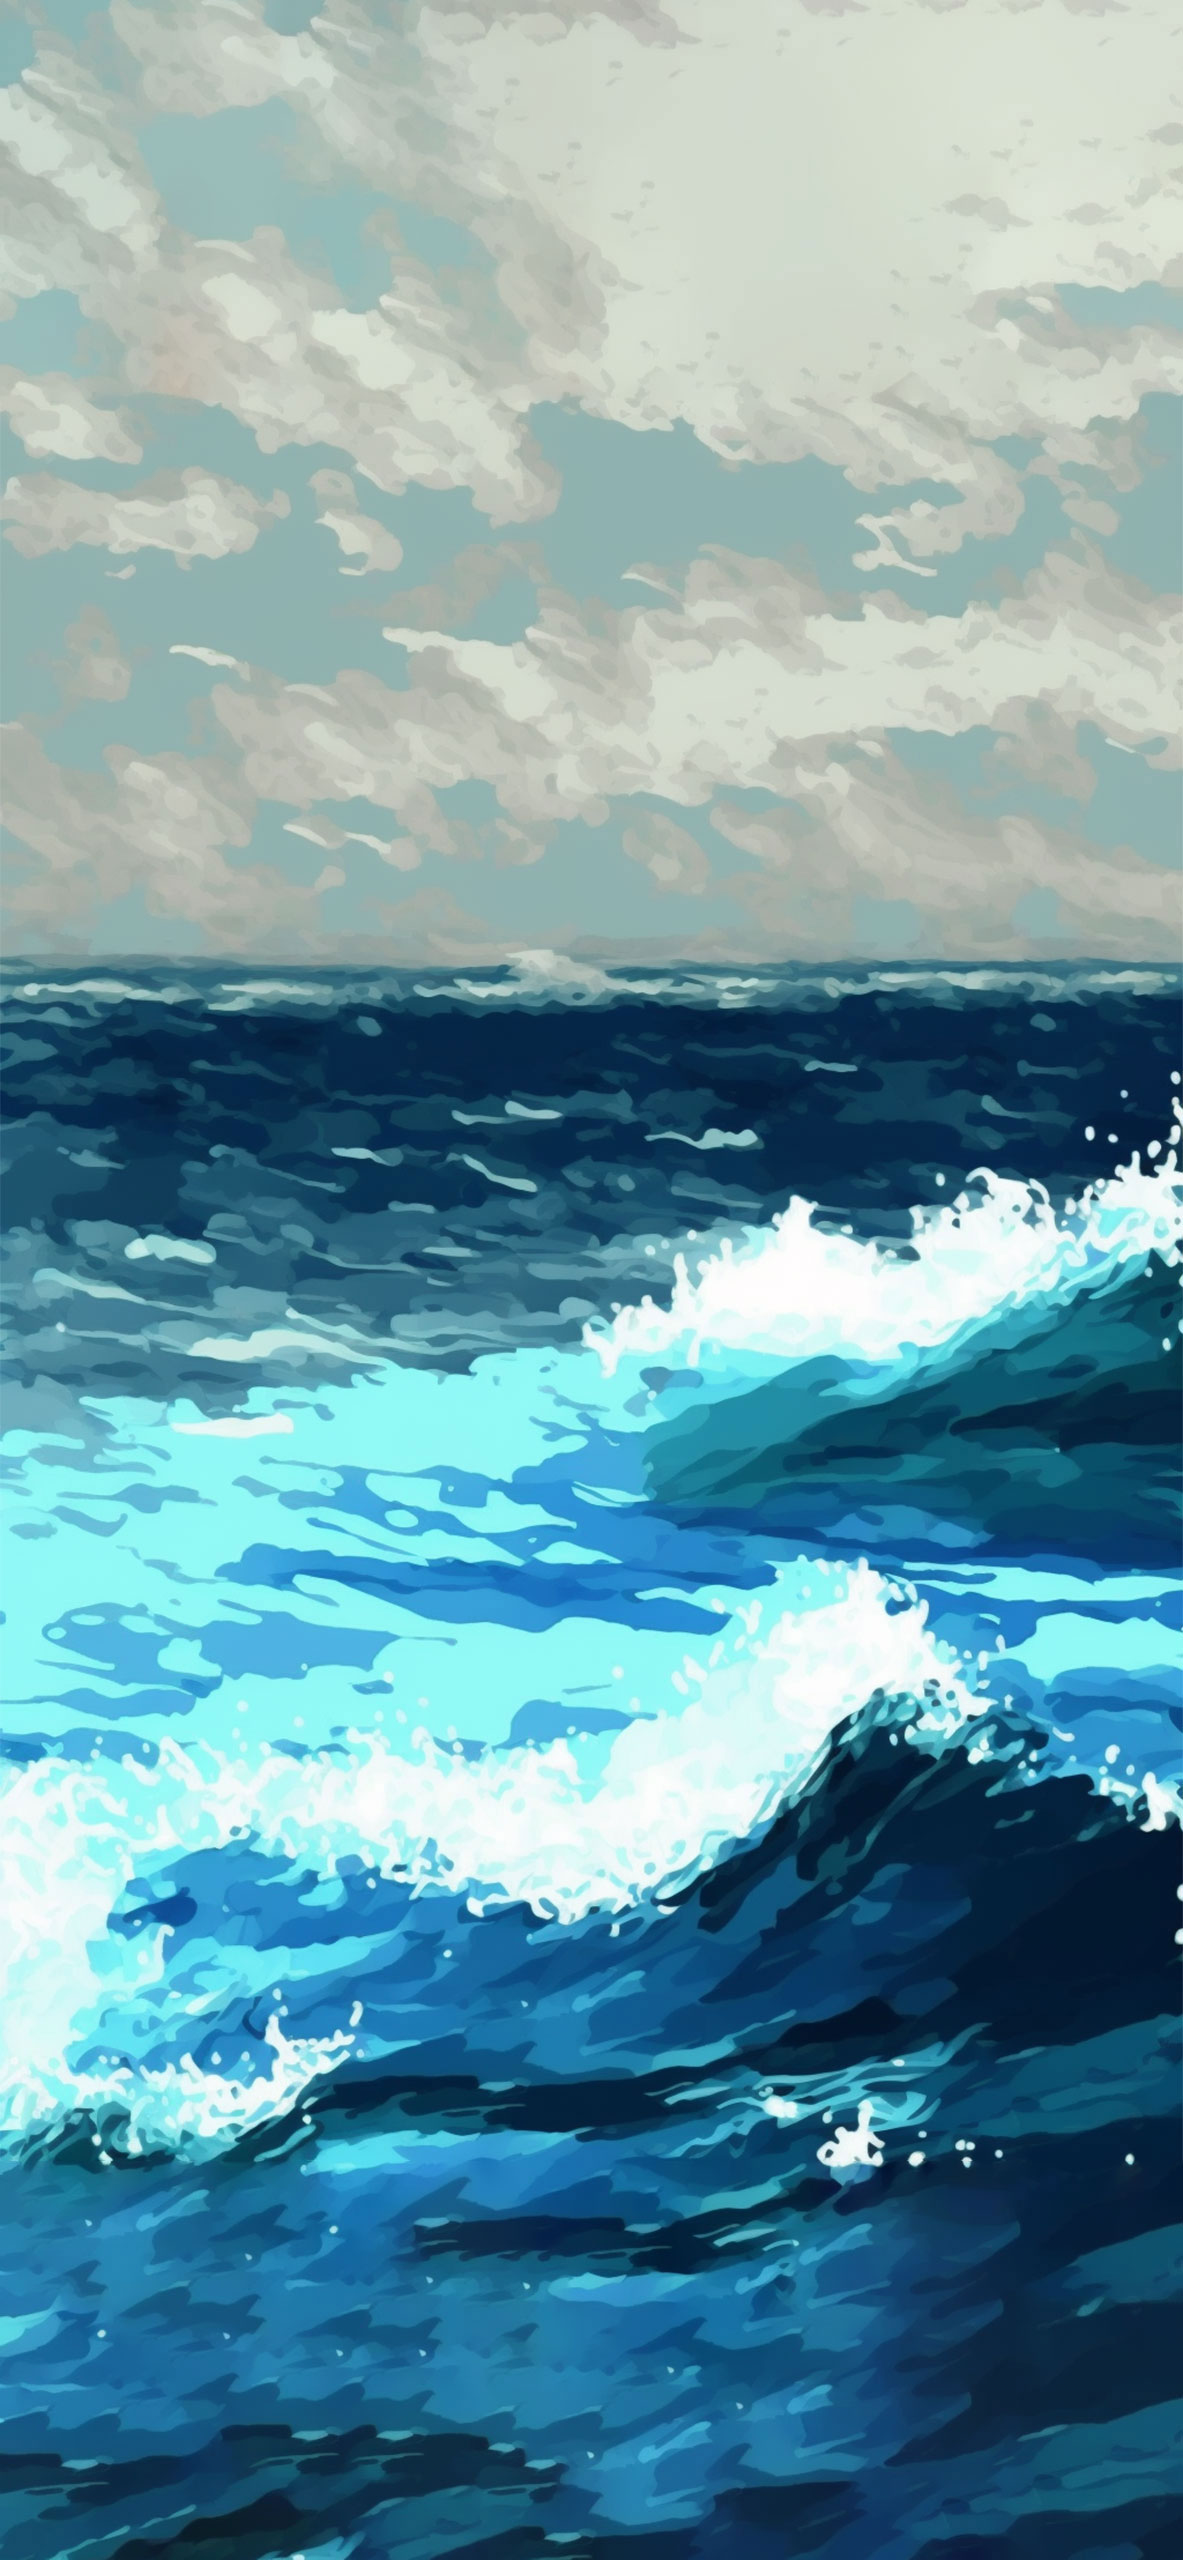 Sea wave art blue wallpapers